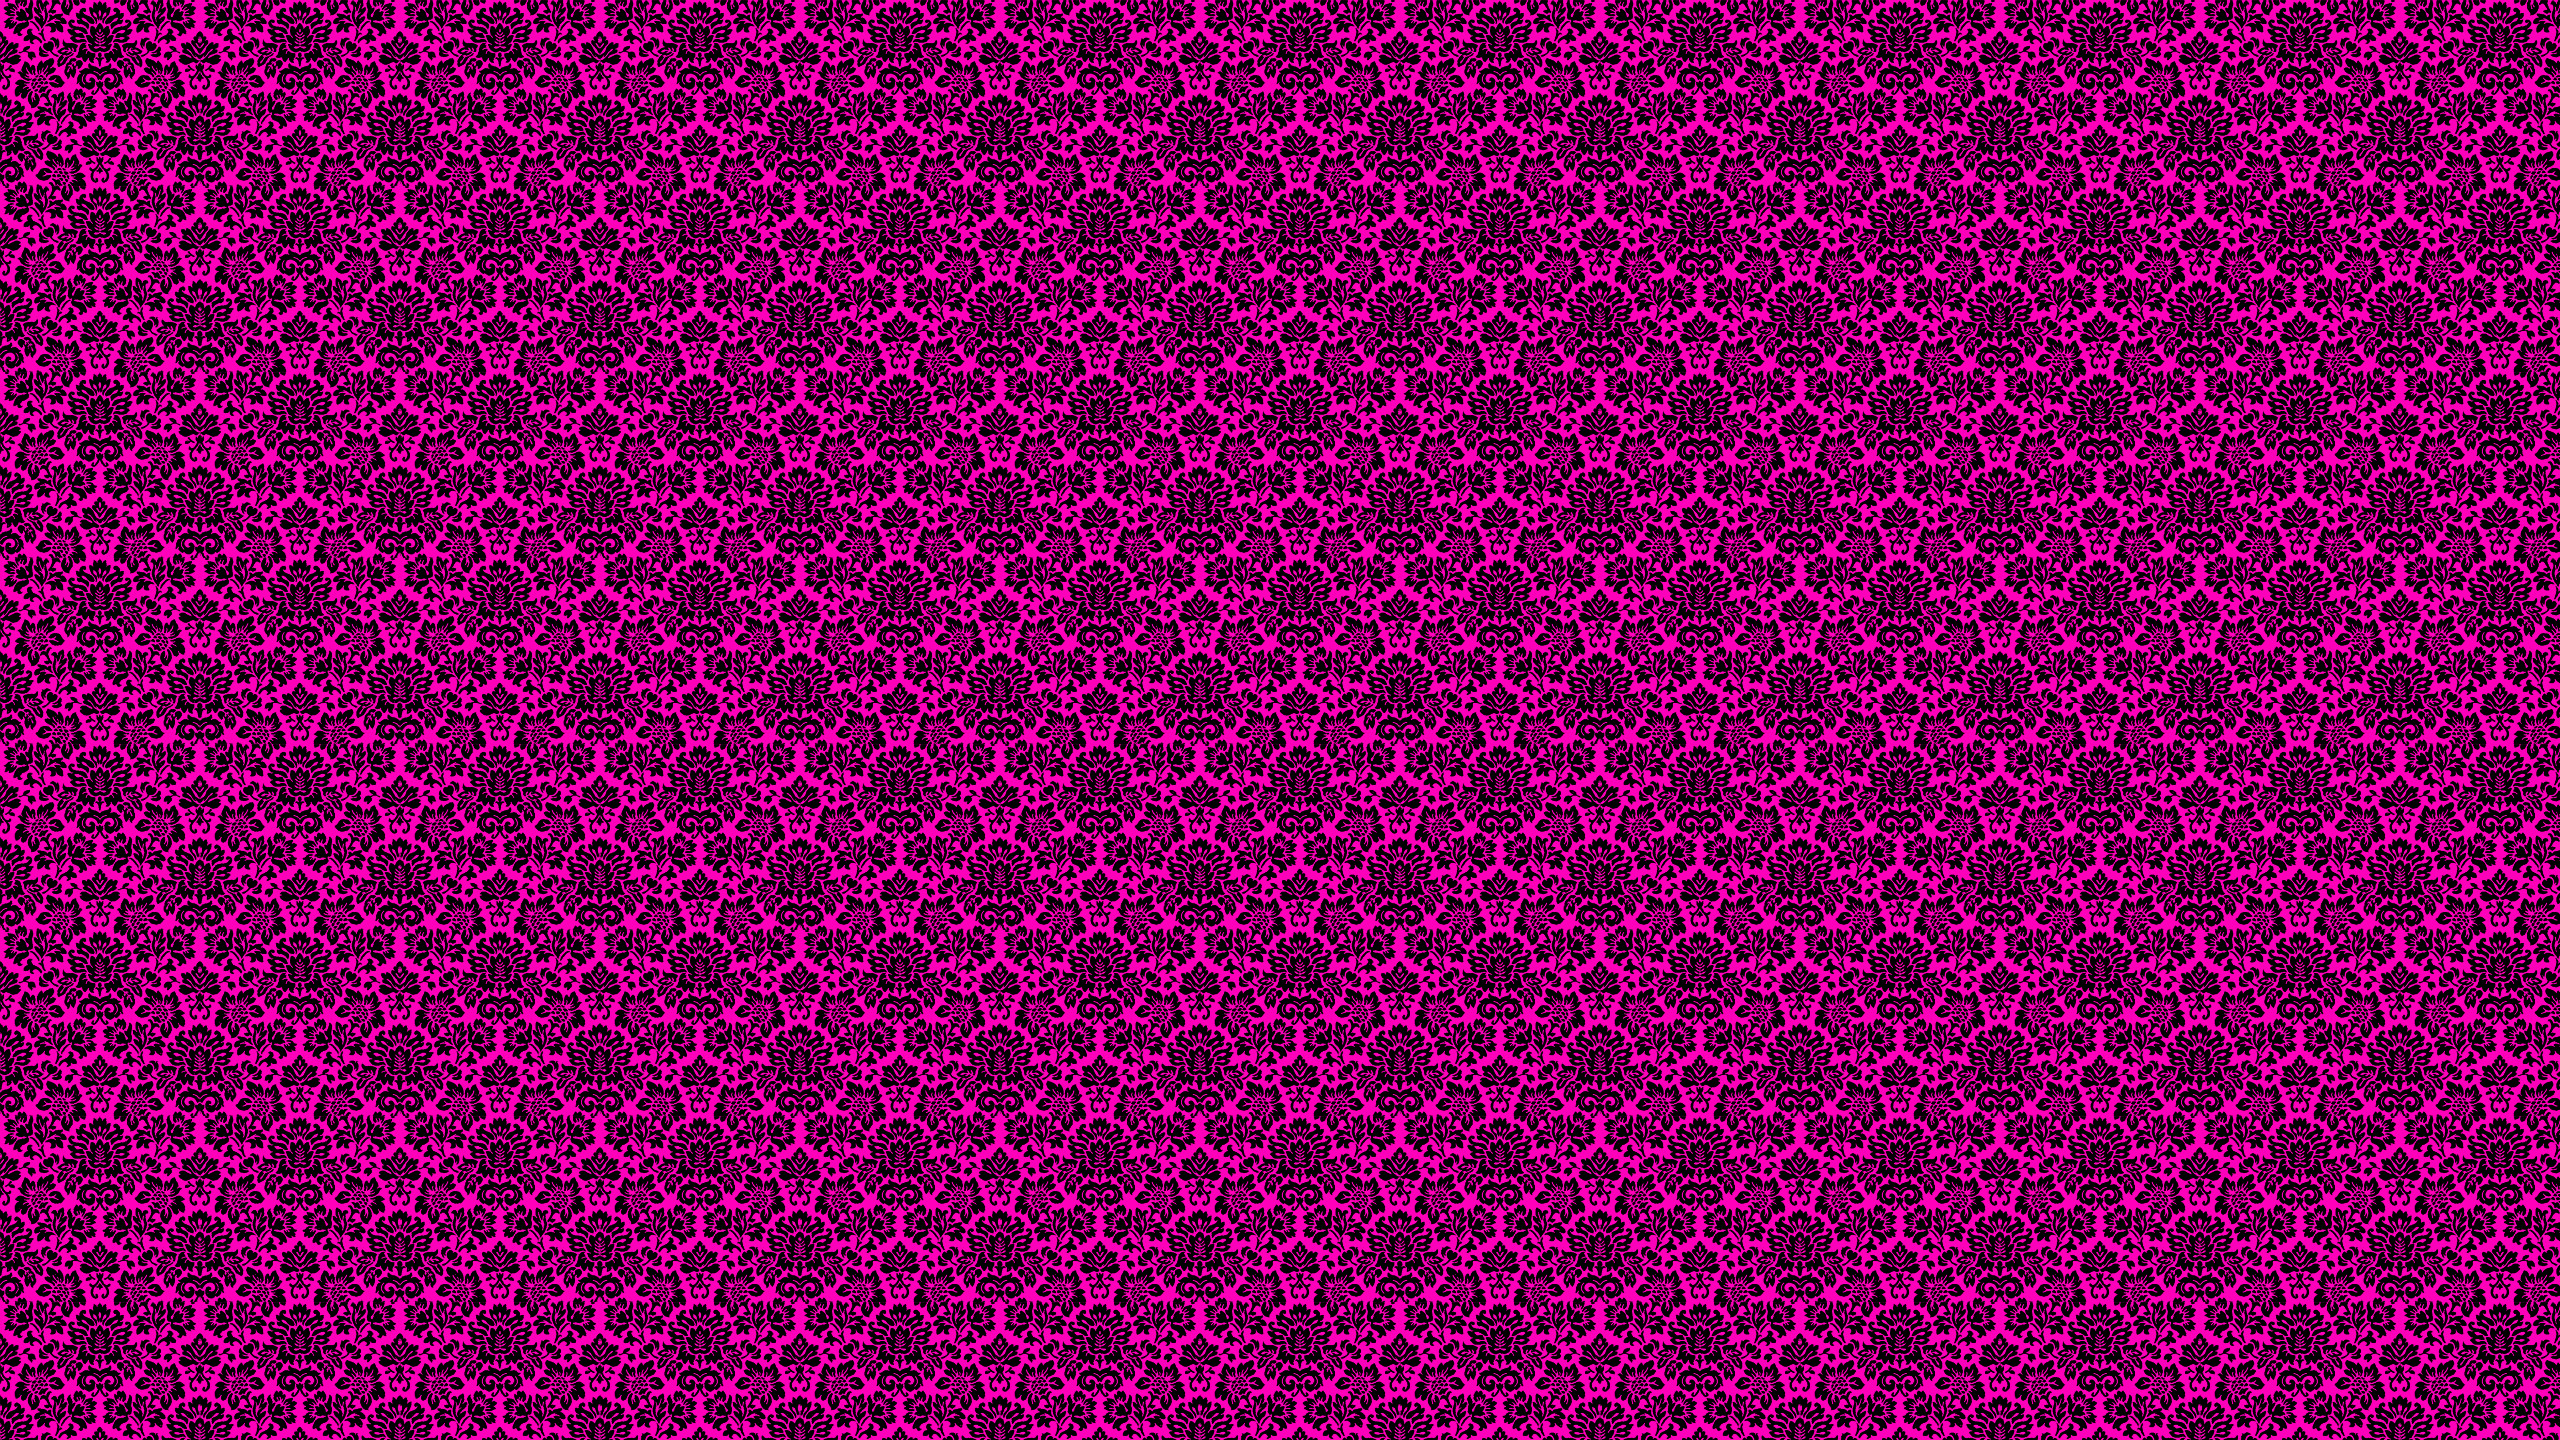 2560x1440 Cool Pink Skulls Default Layout - Free Girly Skulls Theme for Myspace ...